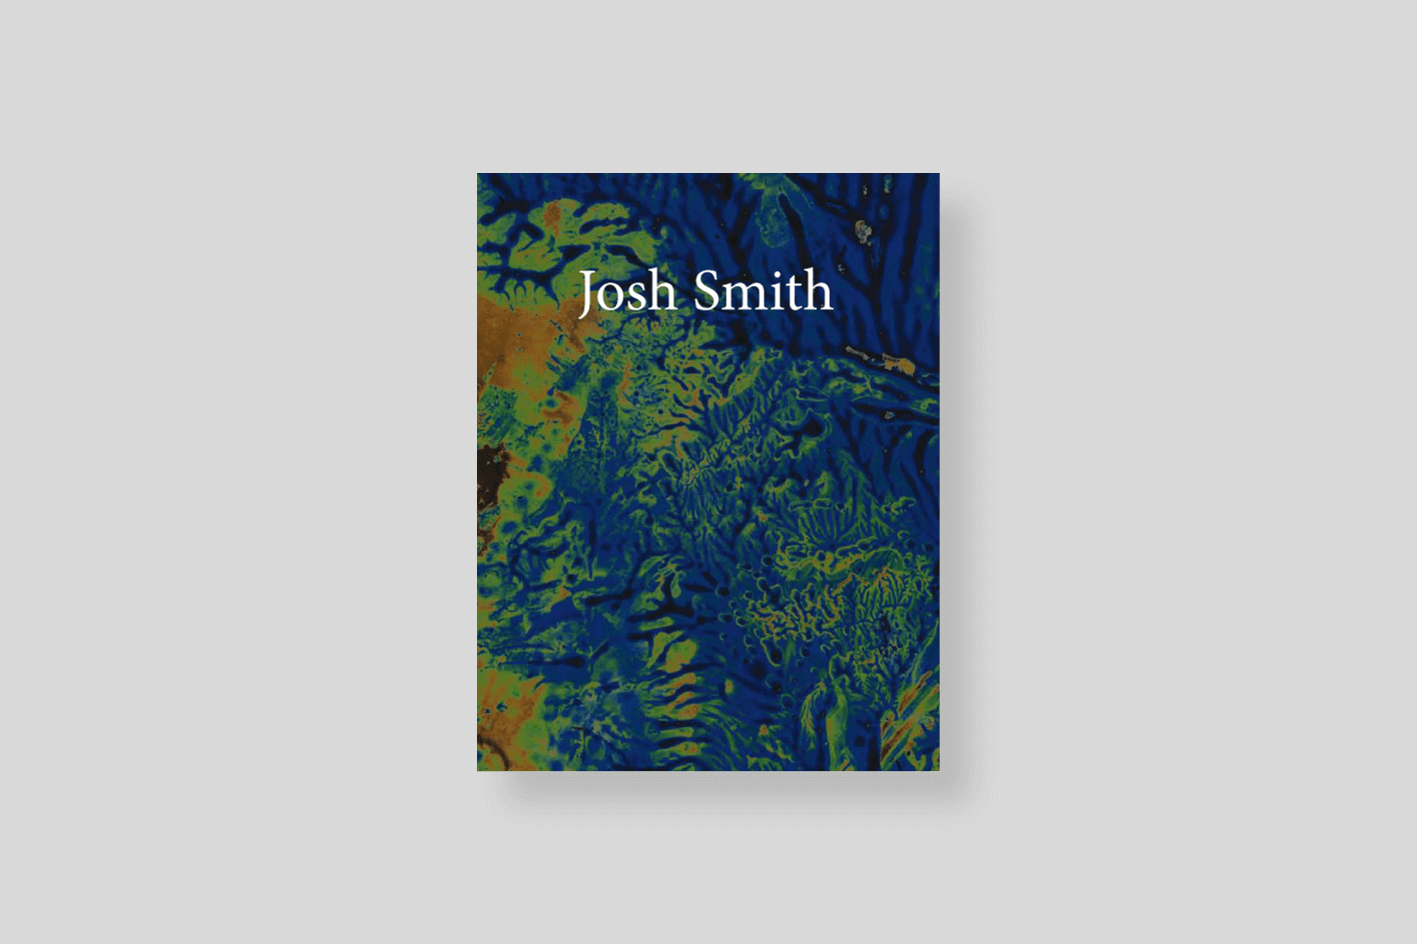 josh-smith-smith-jpr-editions-cover